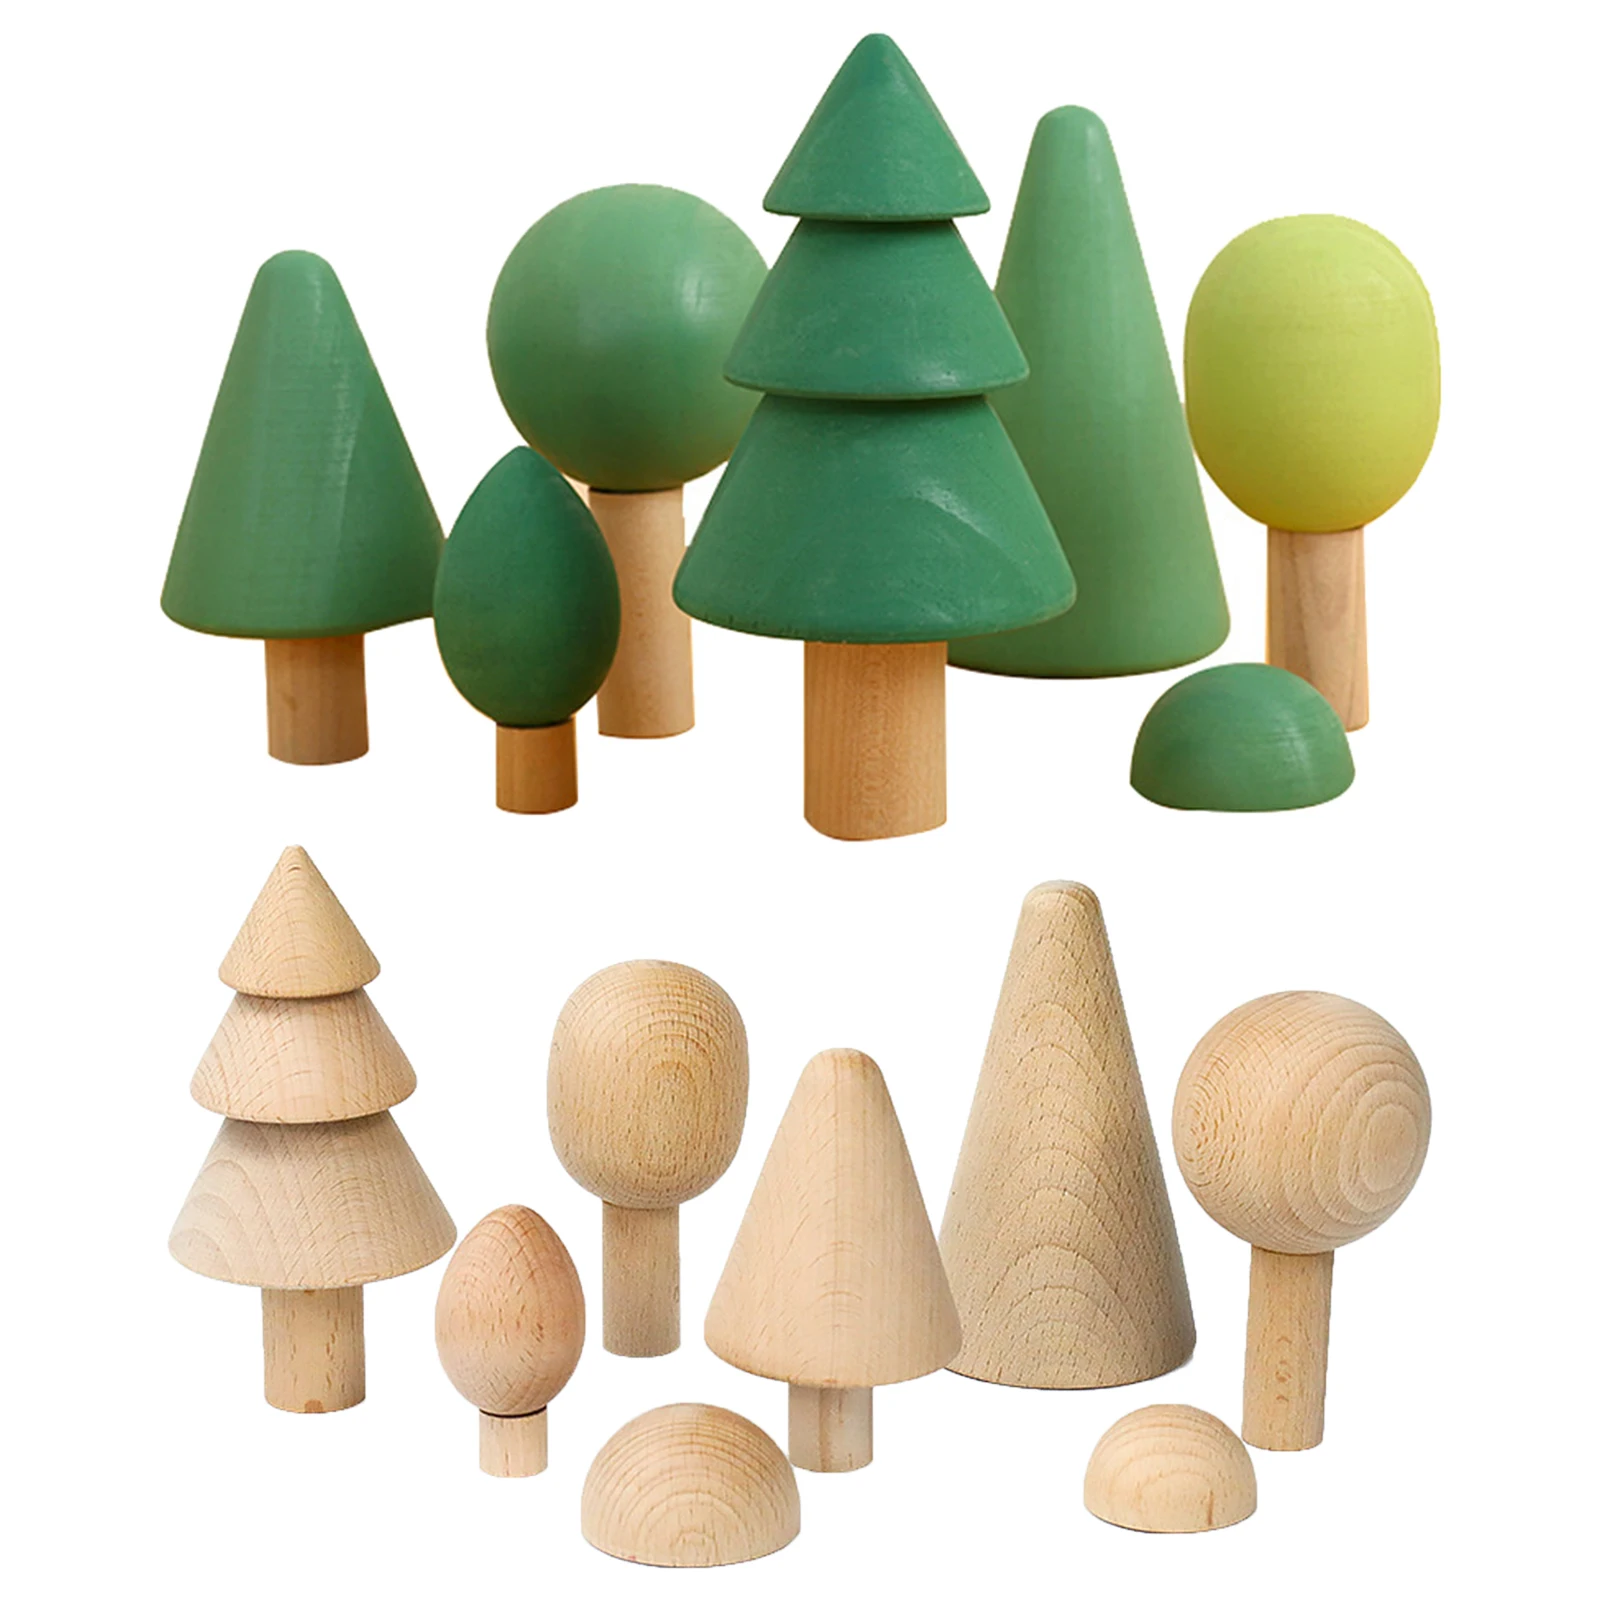 7pcs wood tree Shape Blcoks Yard Stacking Educational Preschool Learning Toys Set for 3 Year Old Children